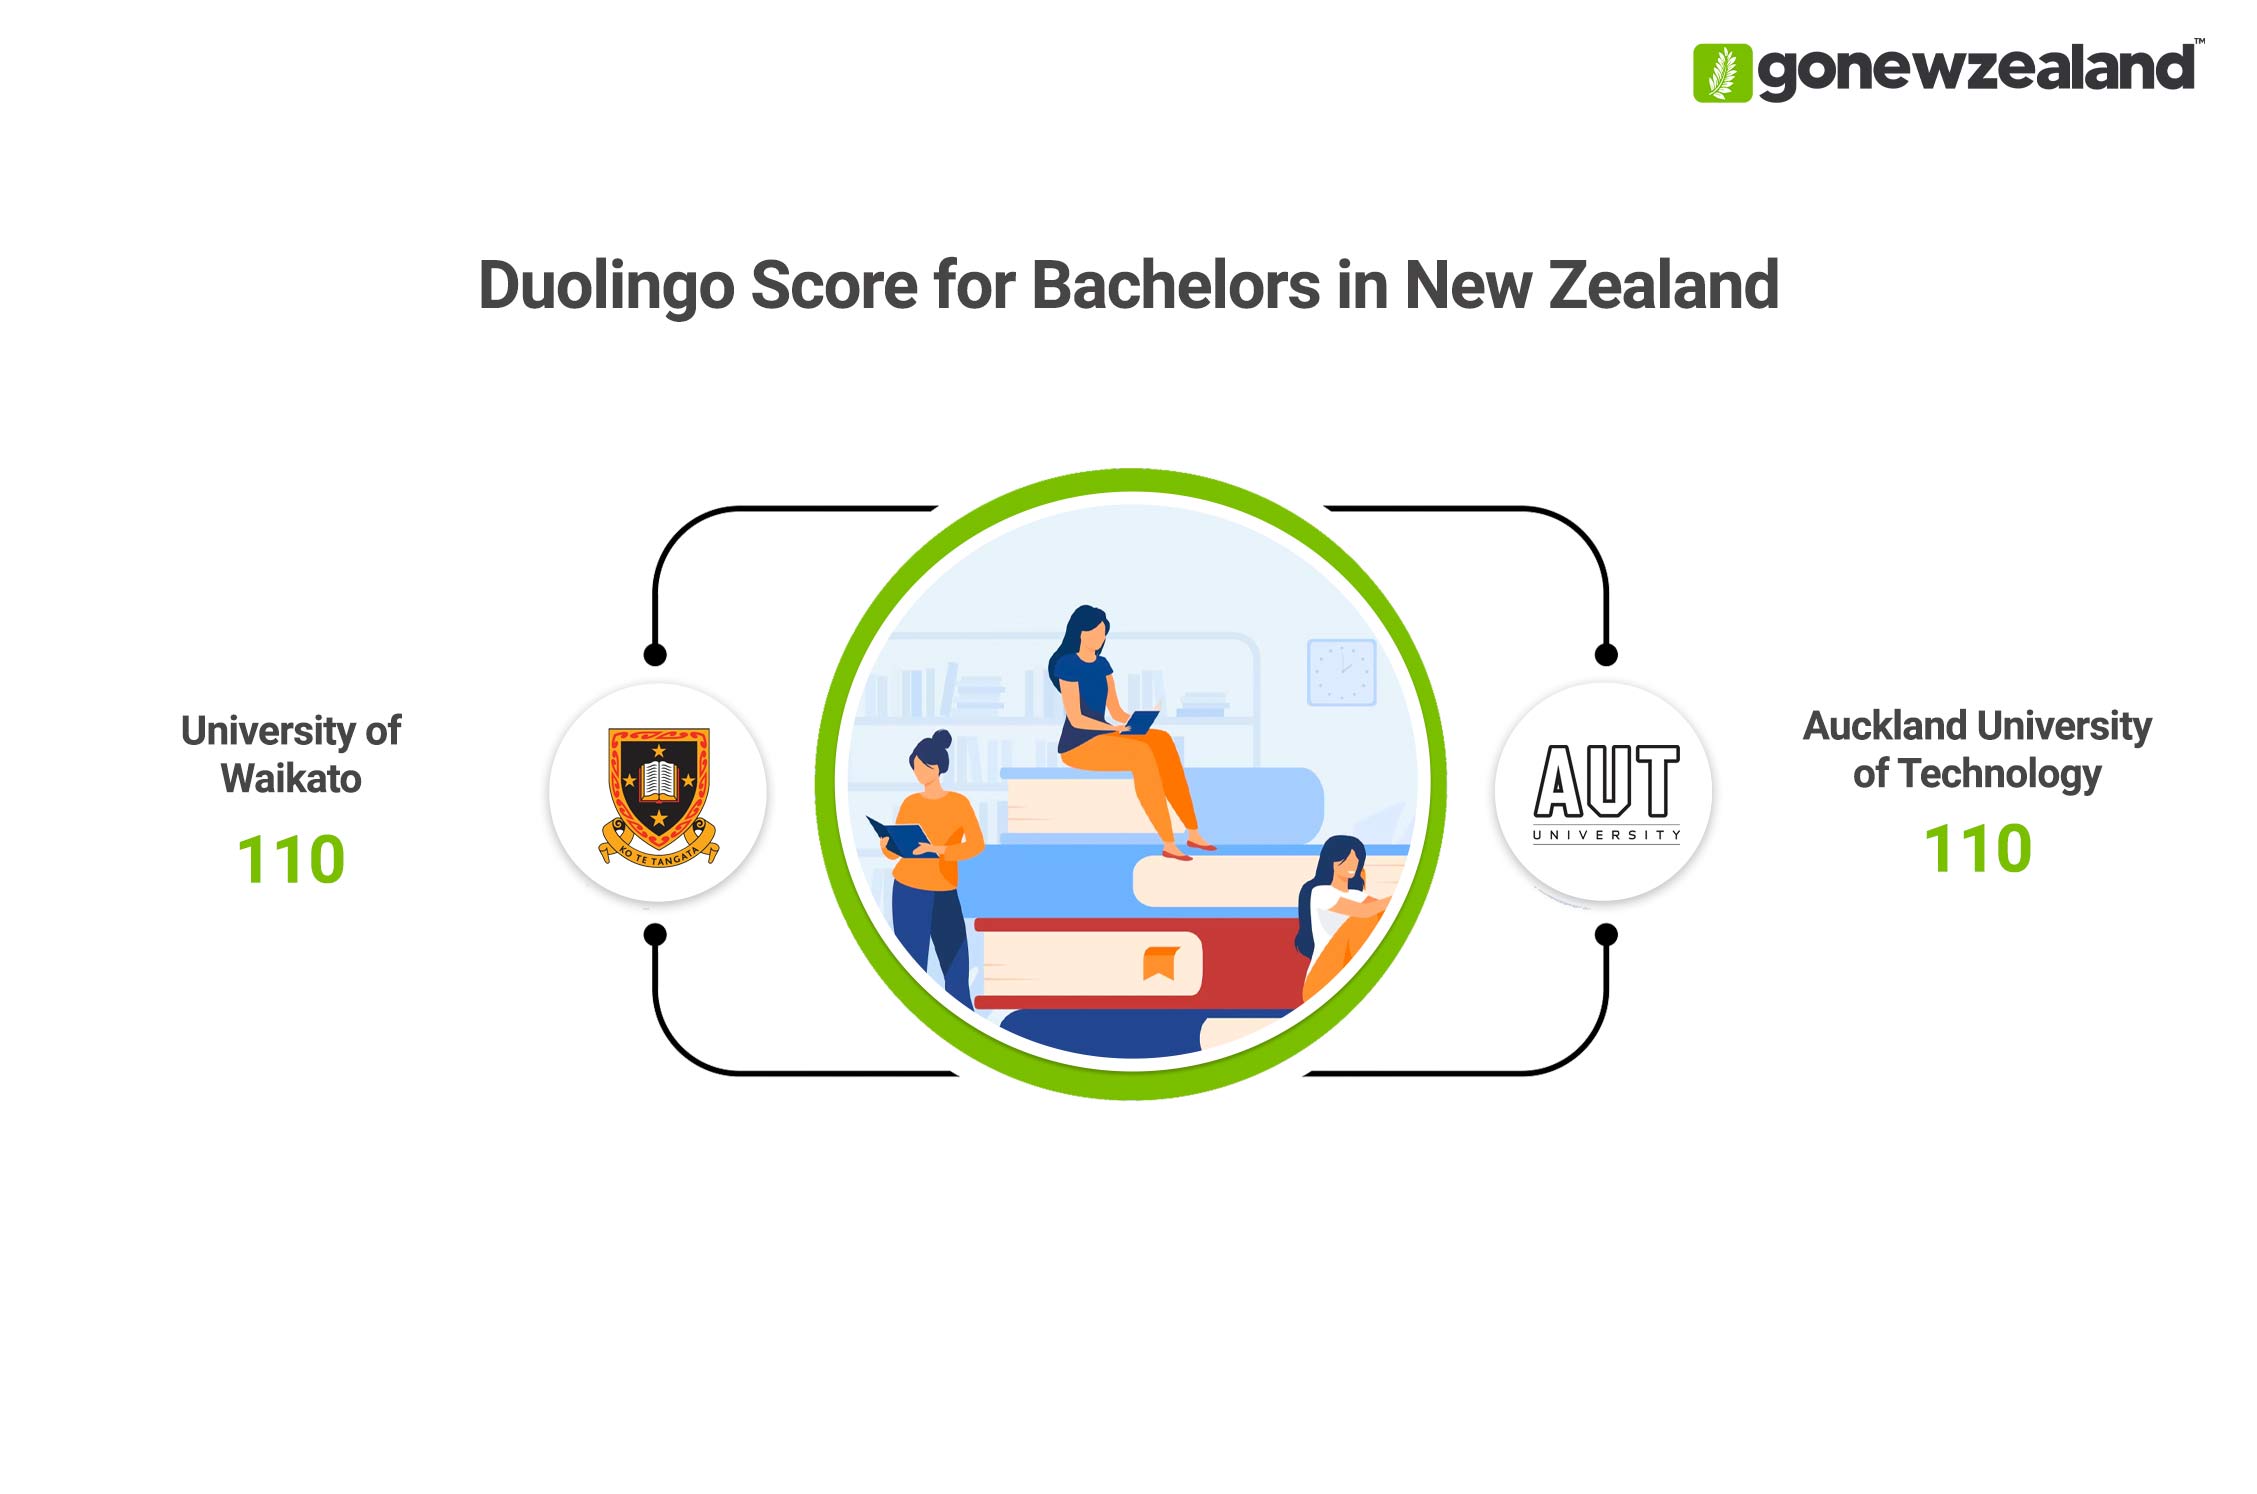 Bachelors in New Zealand Duolingo Score